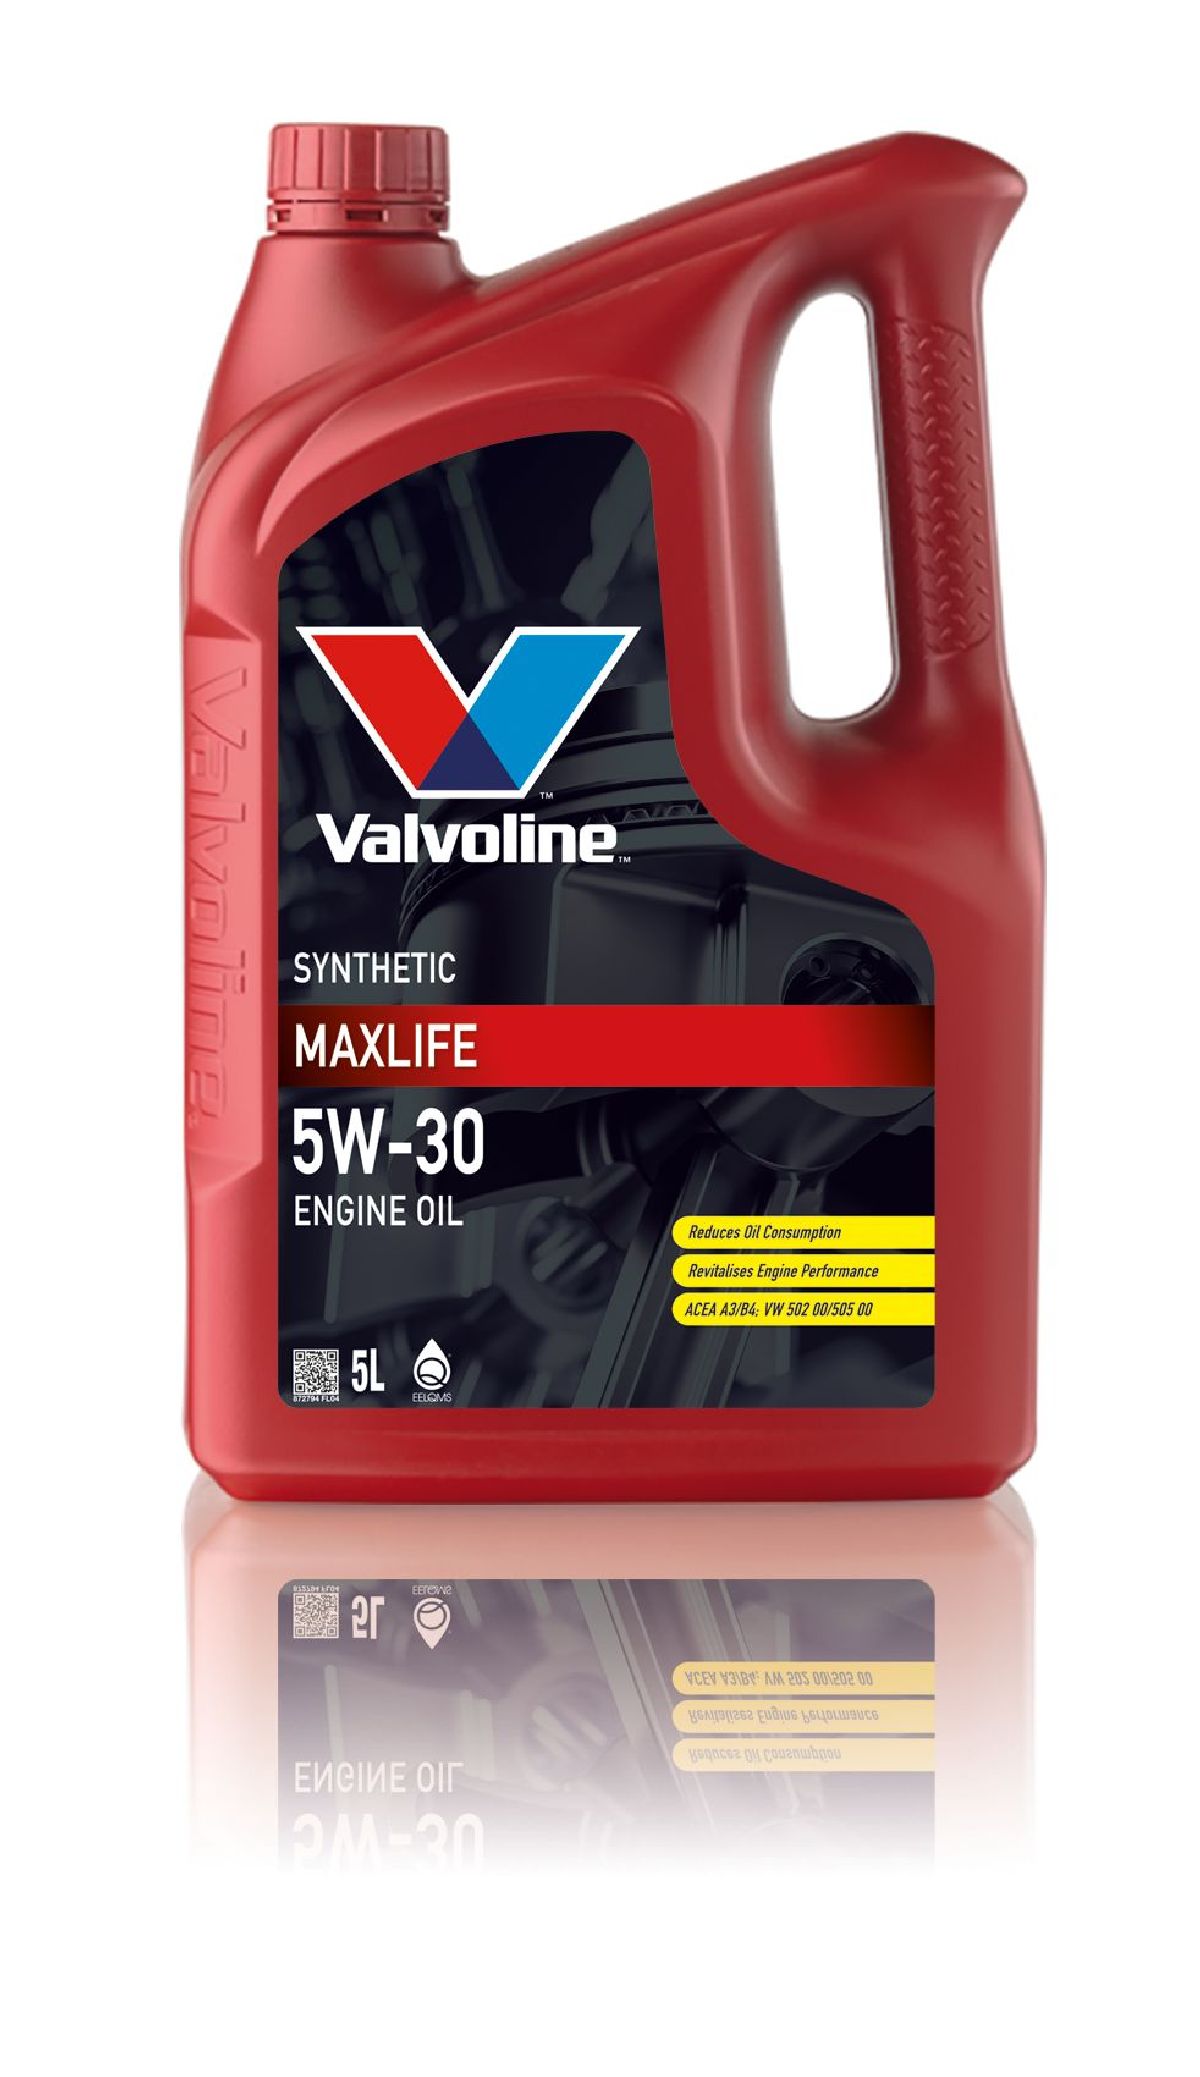 Valvoline Maxlife 5W-30